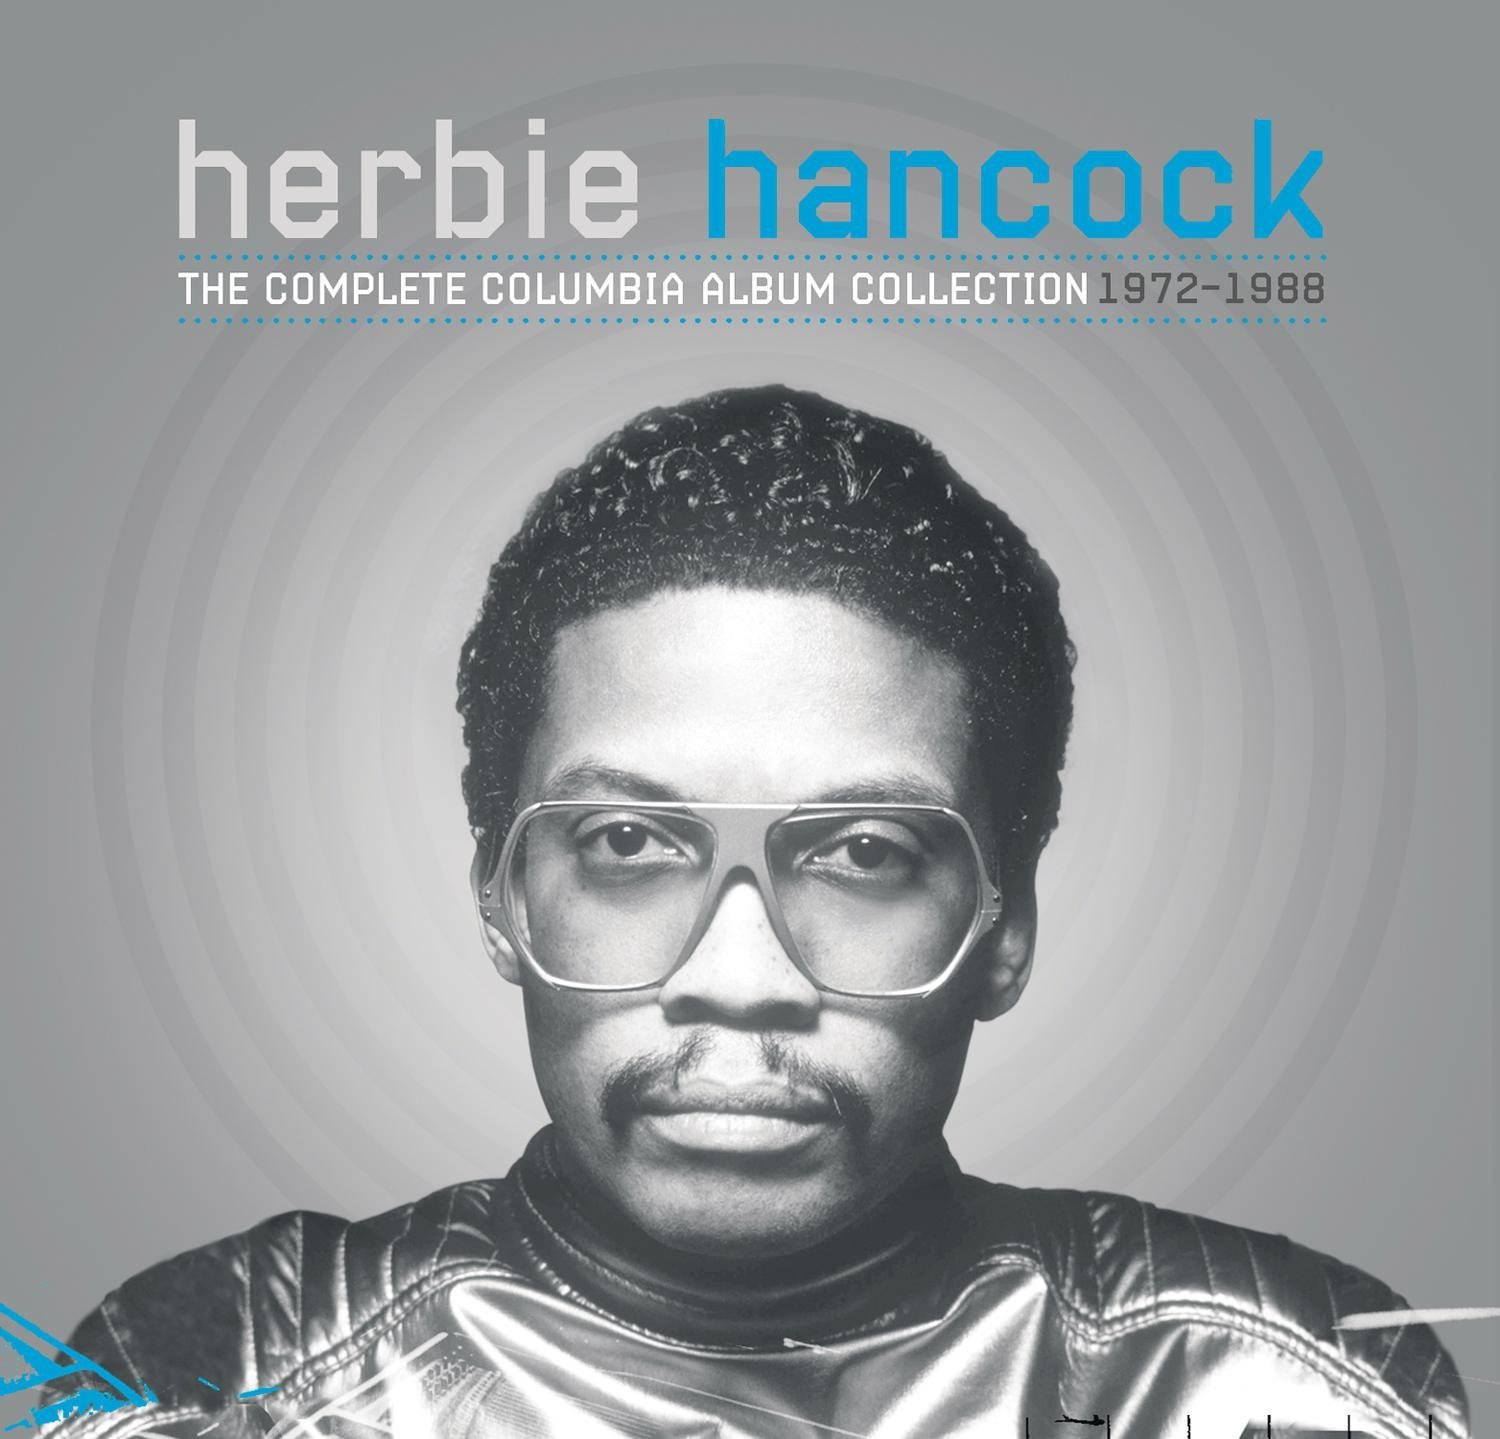 Herbiehancock Die Komplette Columbia Album Sammlung Cover Wallpaper